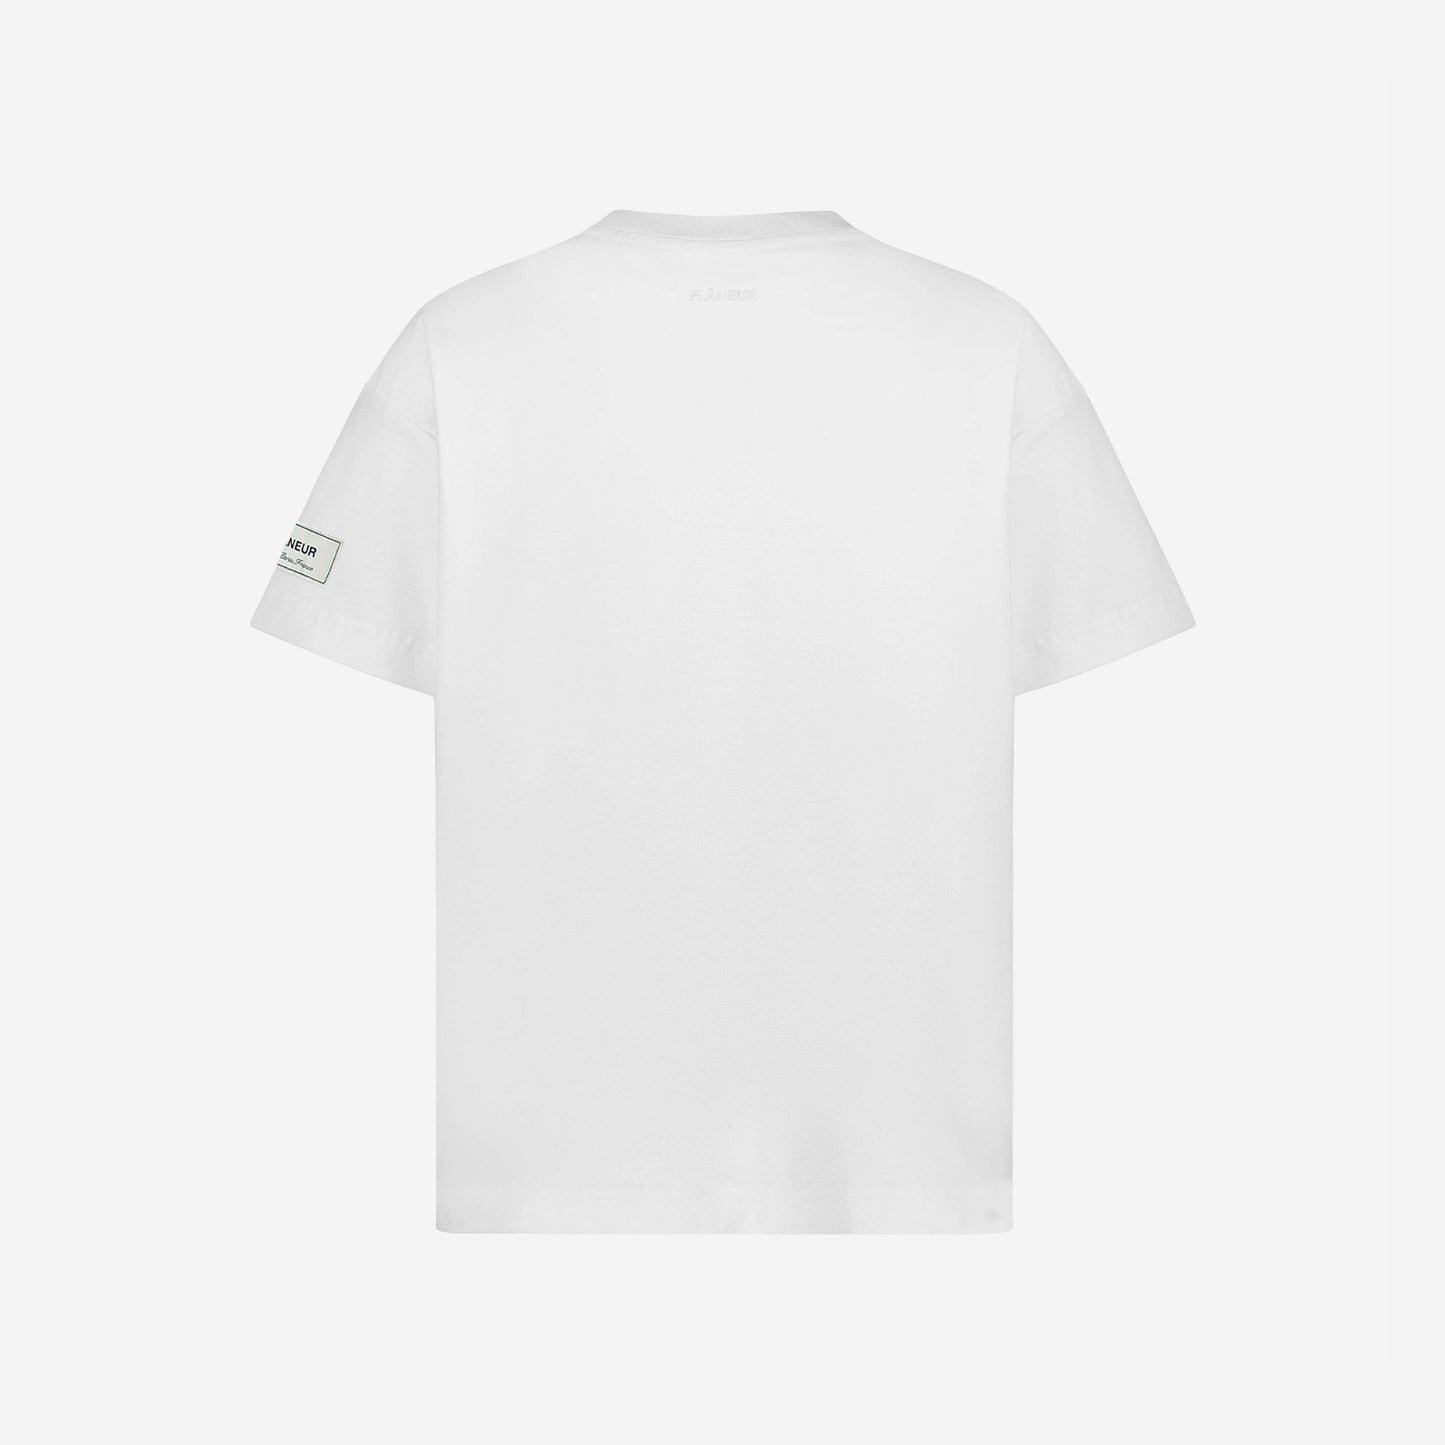 Atelier T-shirt Sleeve Emblem White